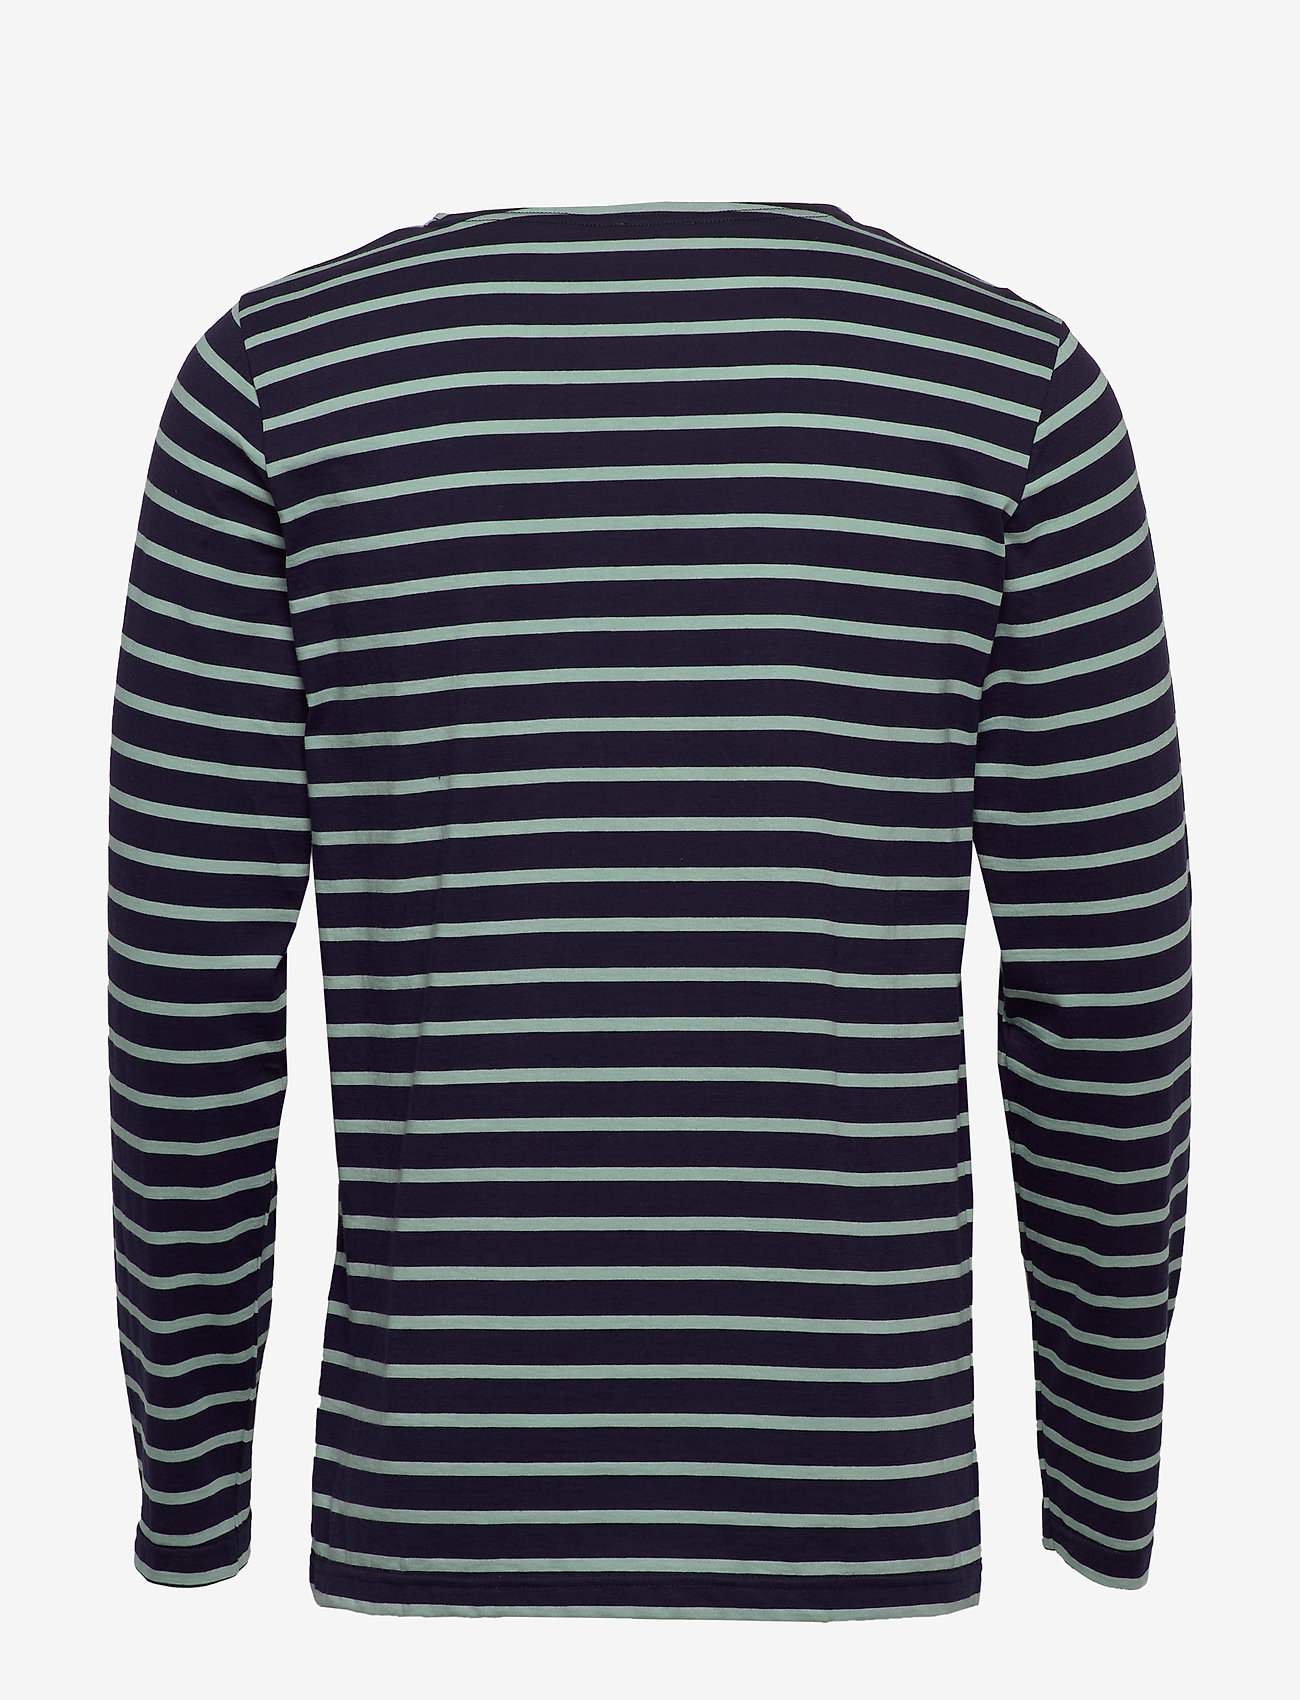 Armor Lux Original Breton Striped Shirt Langærmede t-shirts | Boozt.com